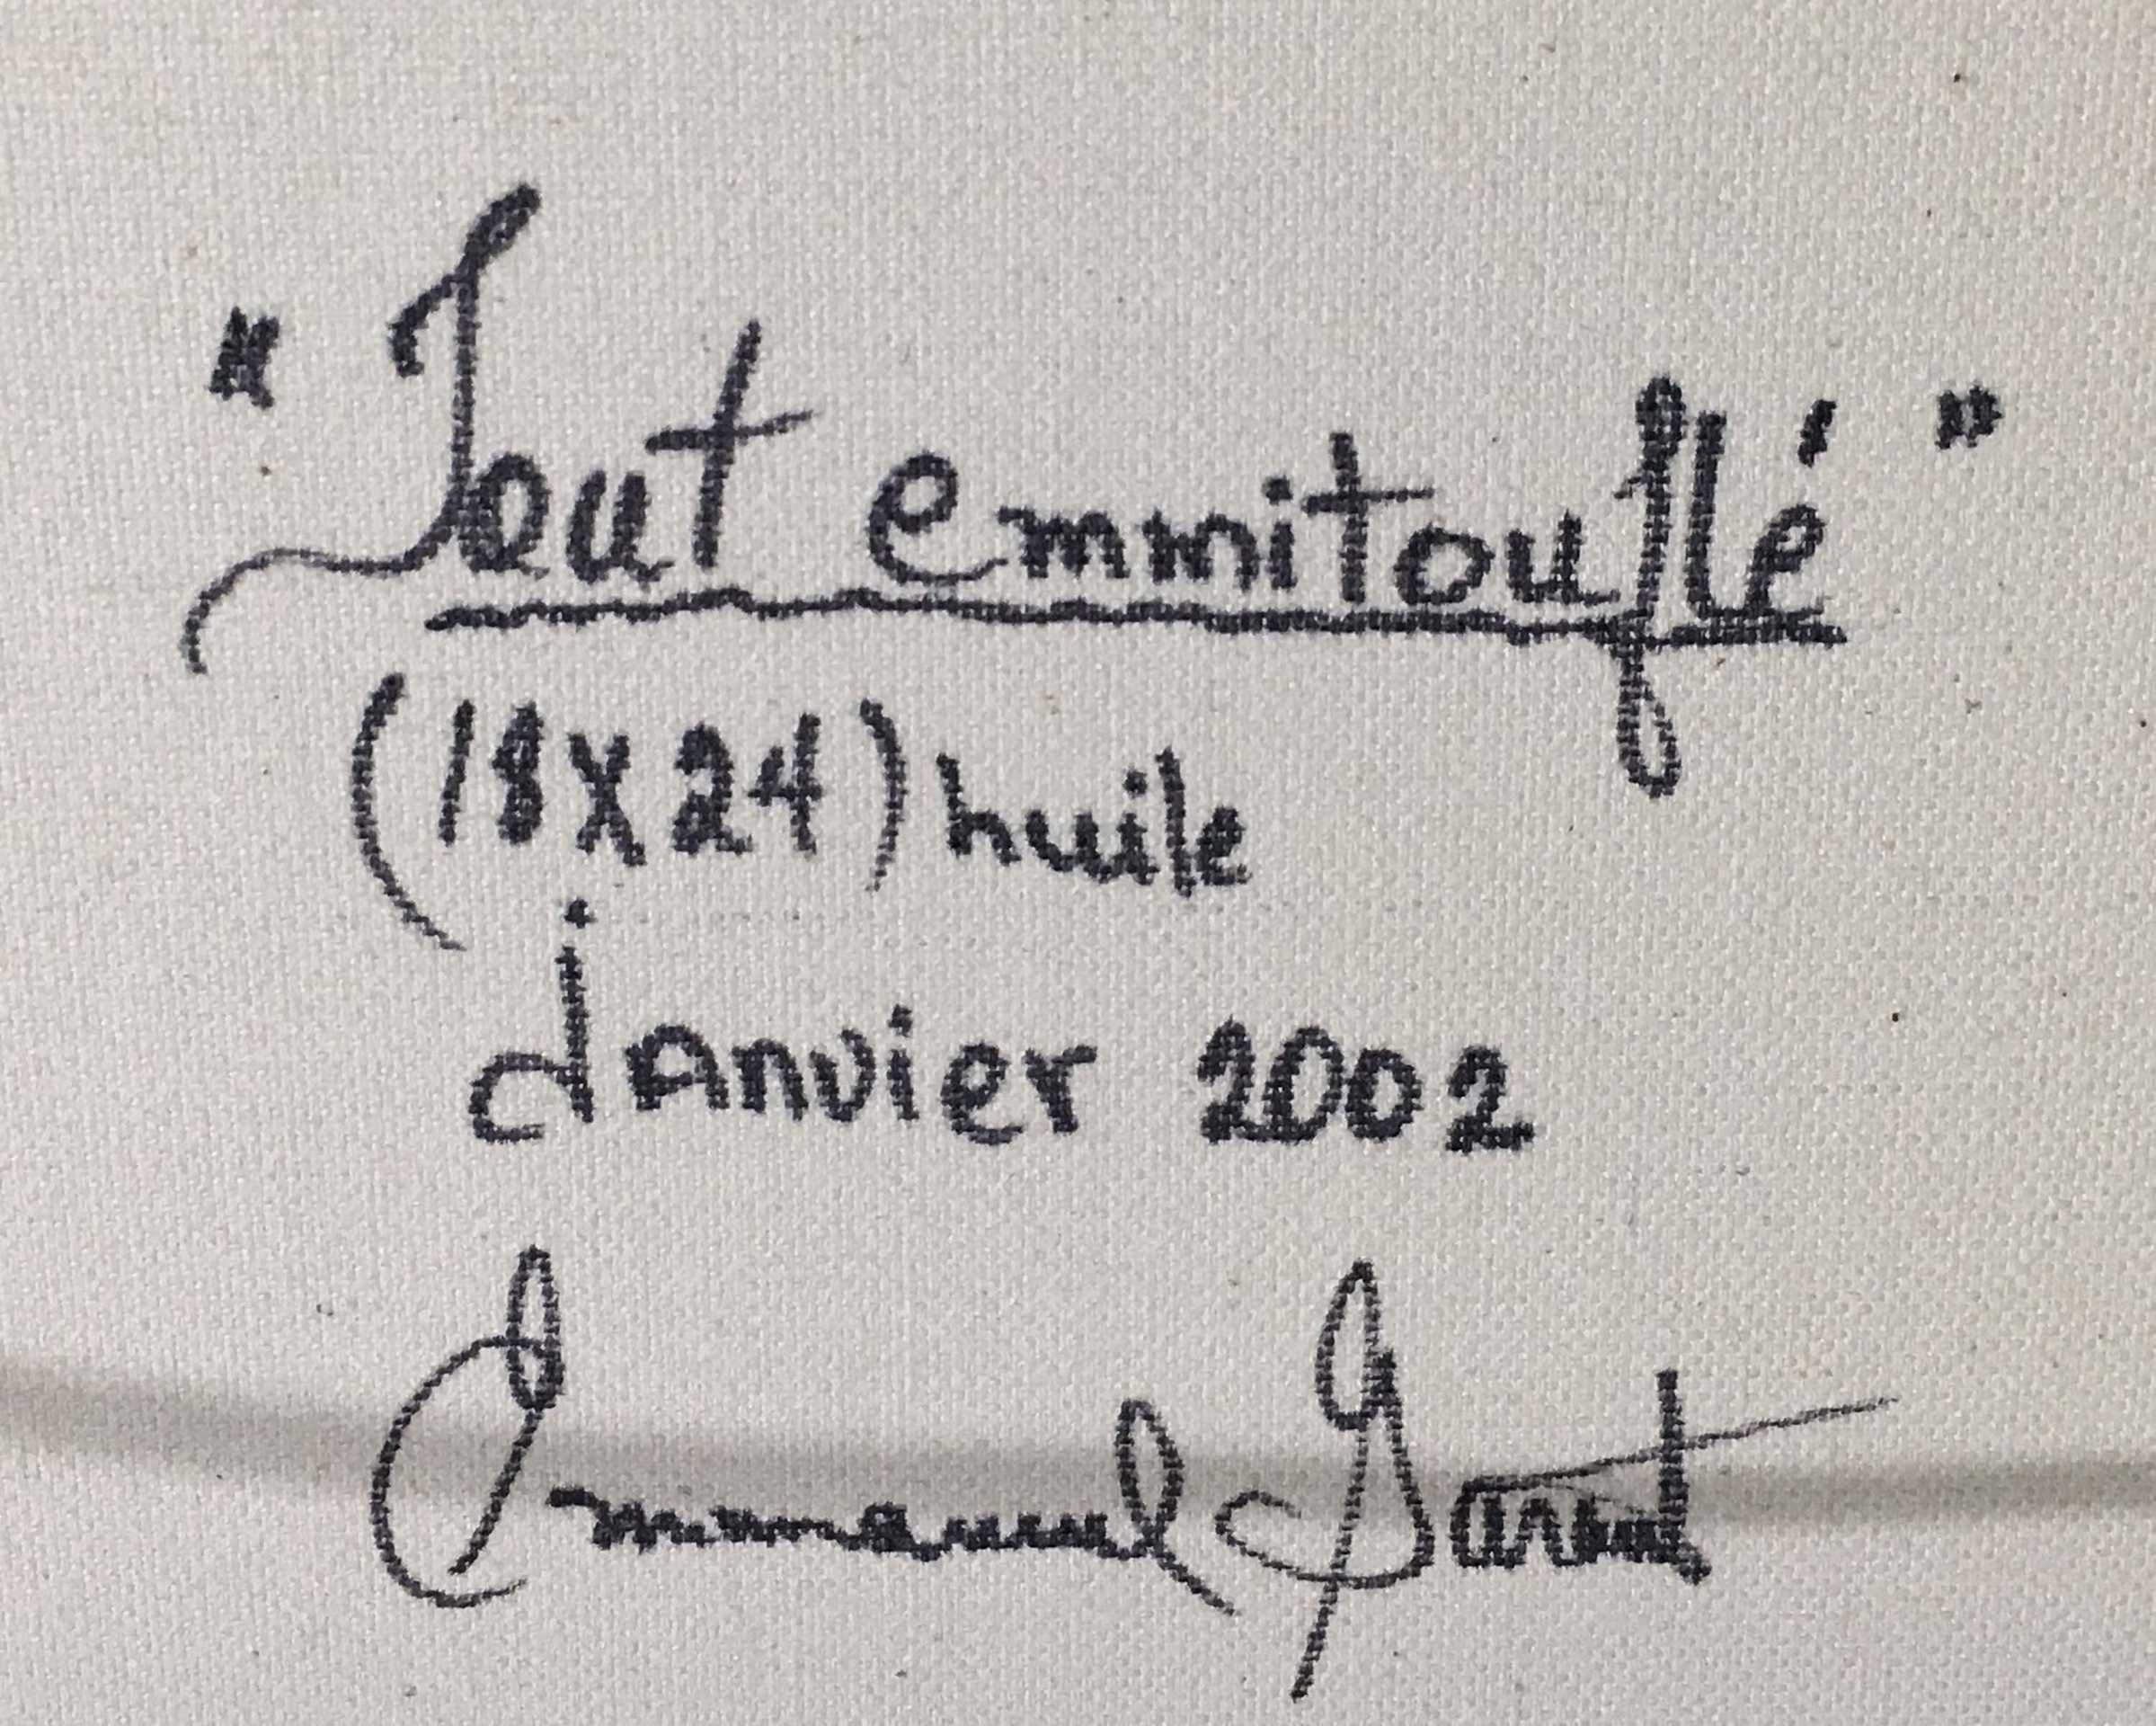 Artwork by Emmanuel Garant, Garant, Emmanuel - Tout emmitouflé - 2002, Made of Oil on canvas